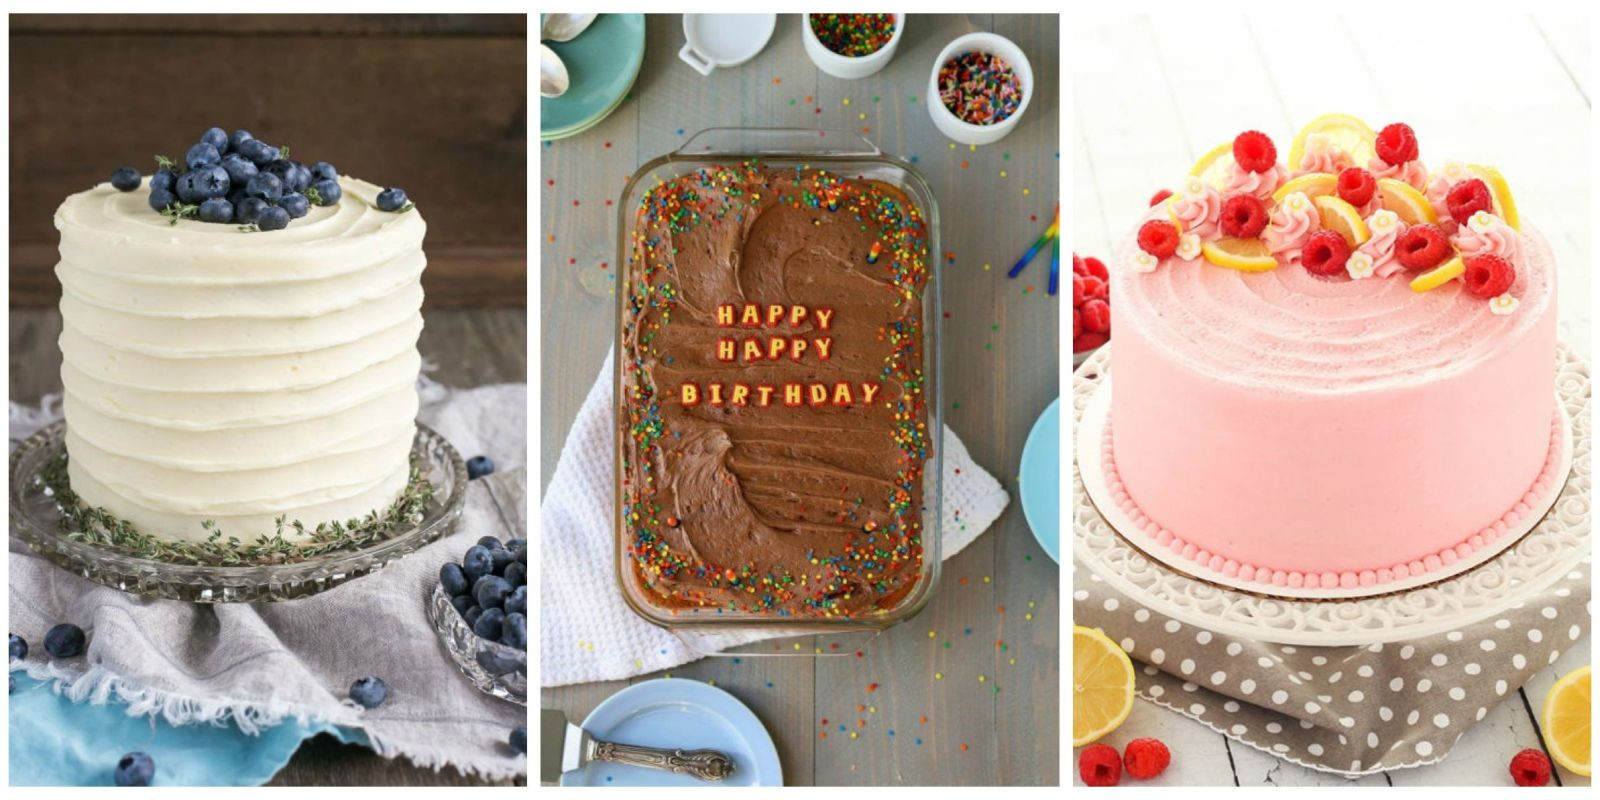 Homemade Birthday Cake Recipes
 22 Homemade Birthday Cake Ideas Easy Recipes for